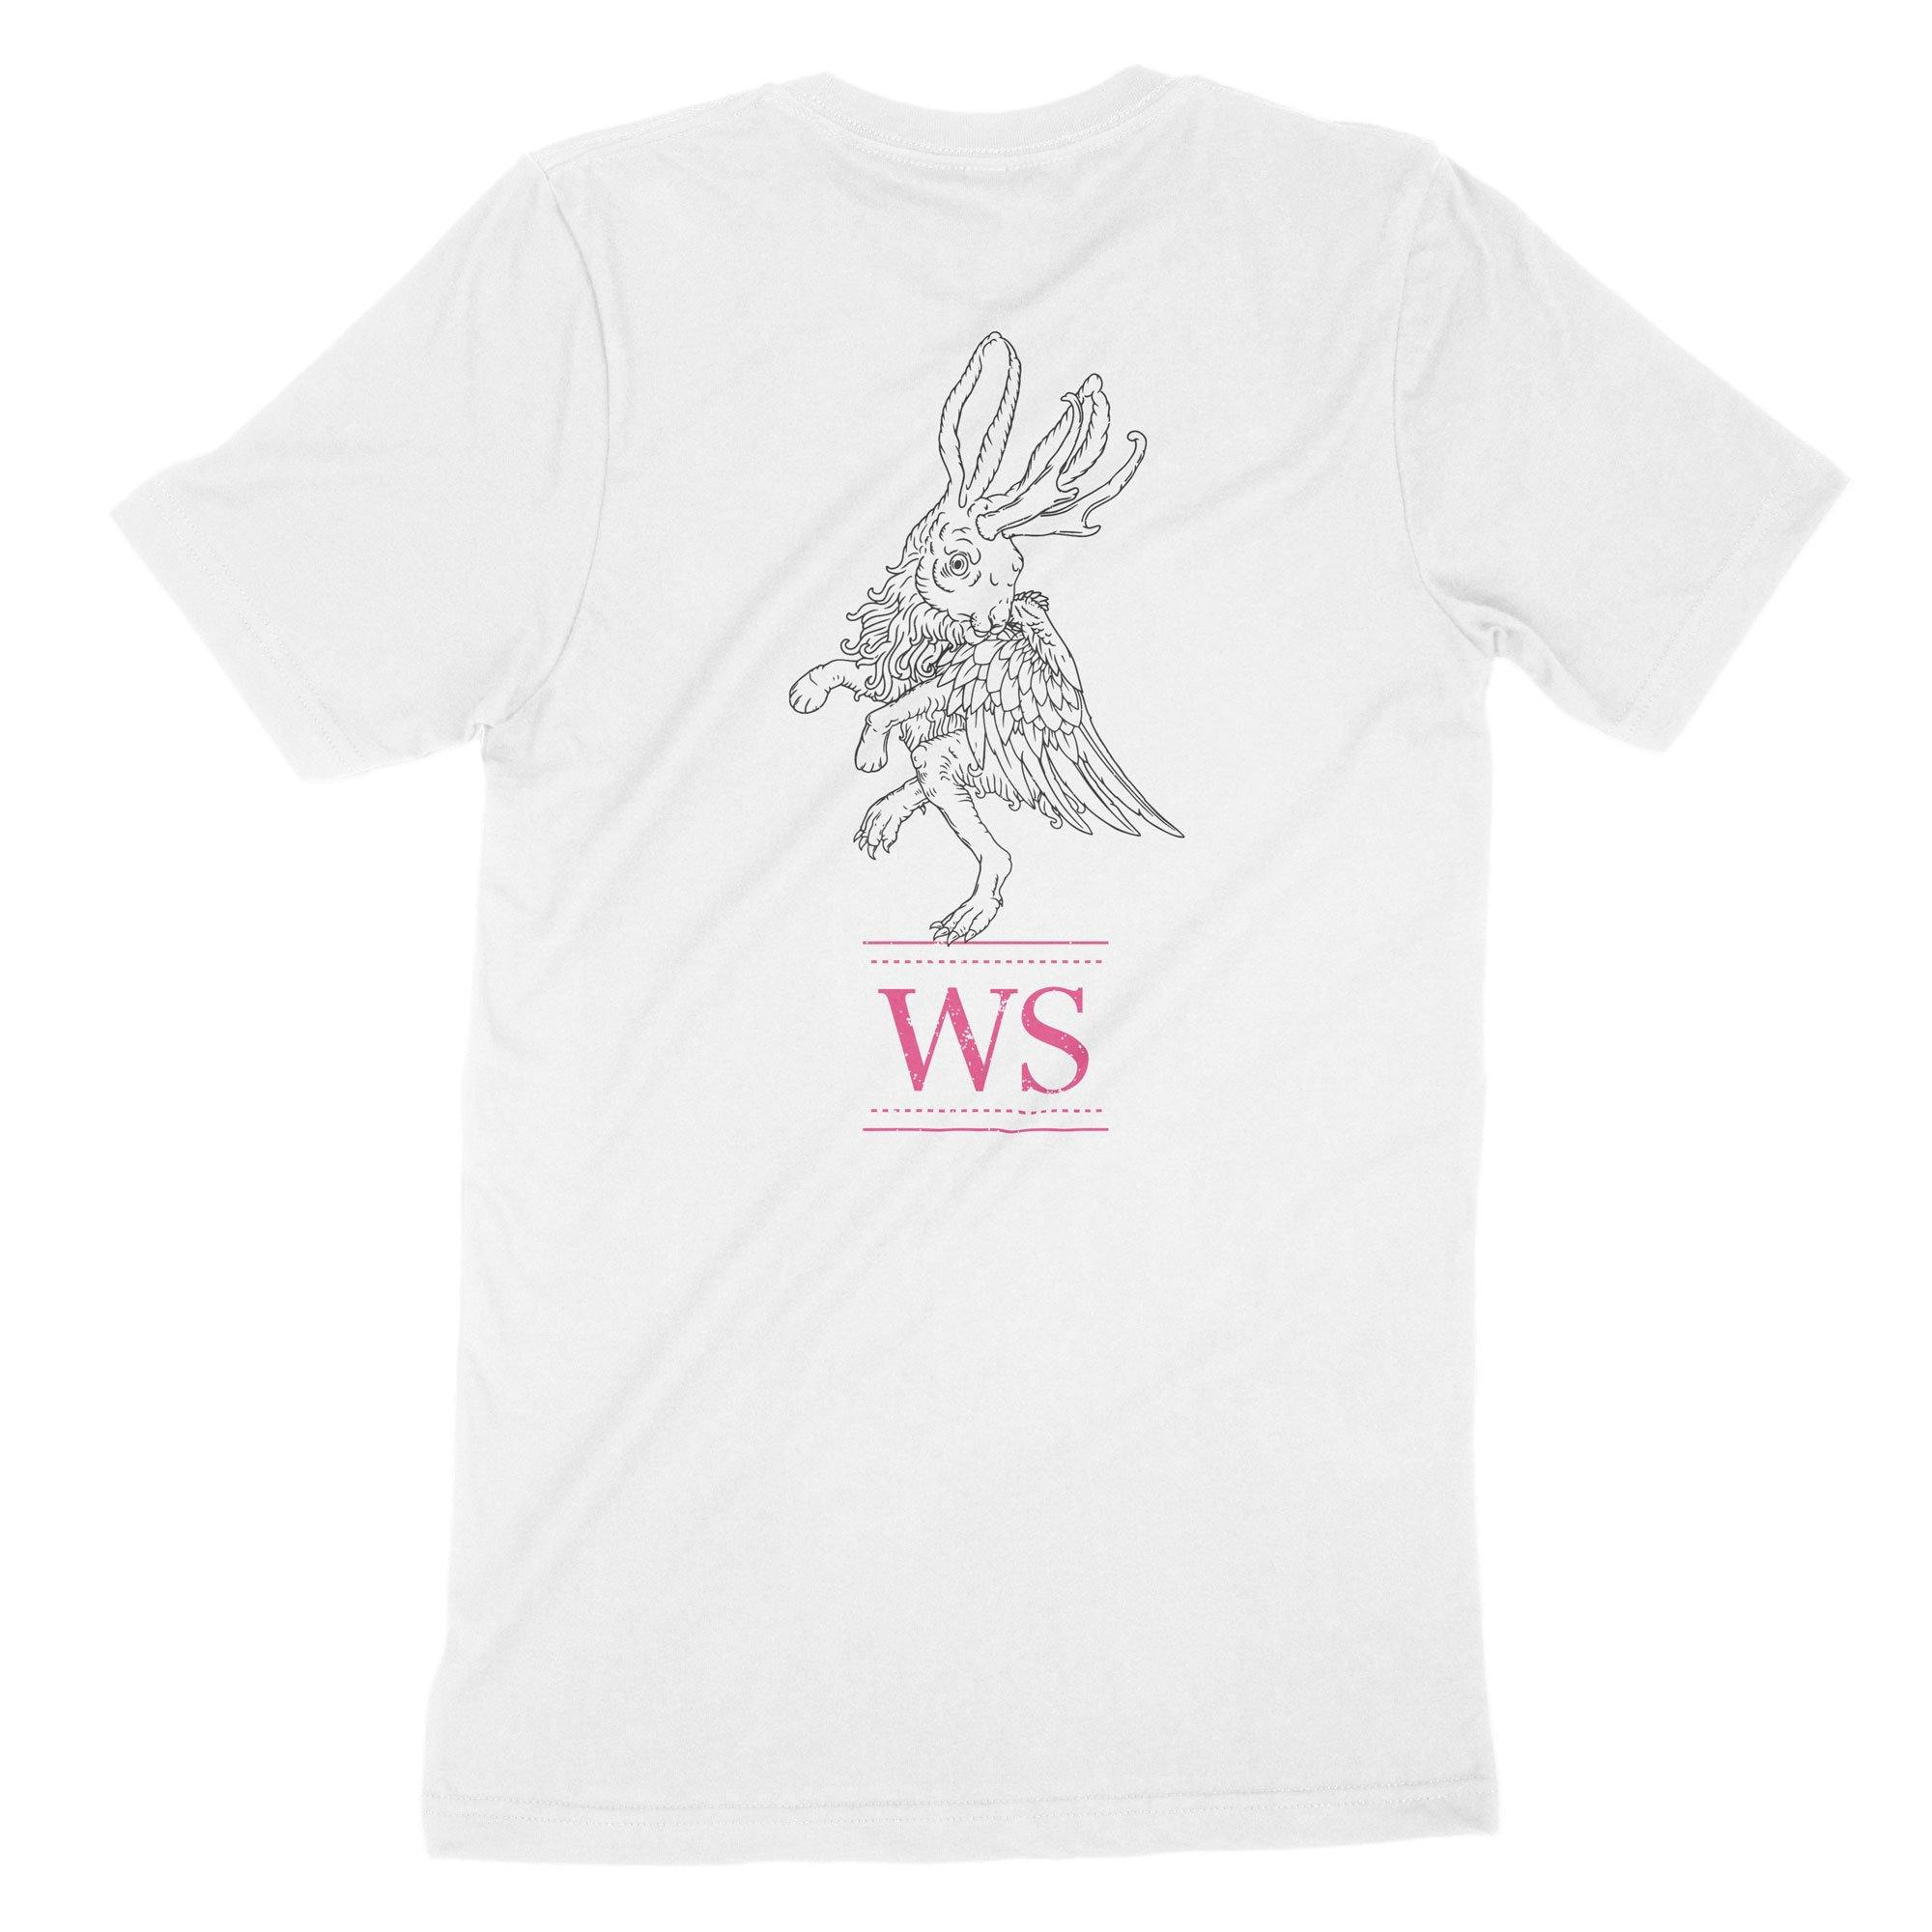 T-Shirt "Wolpertinger" - wise enough